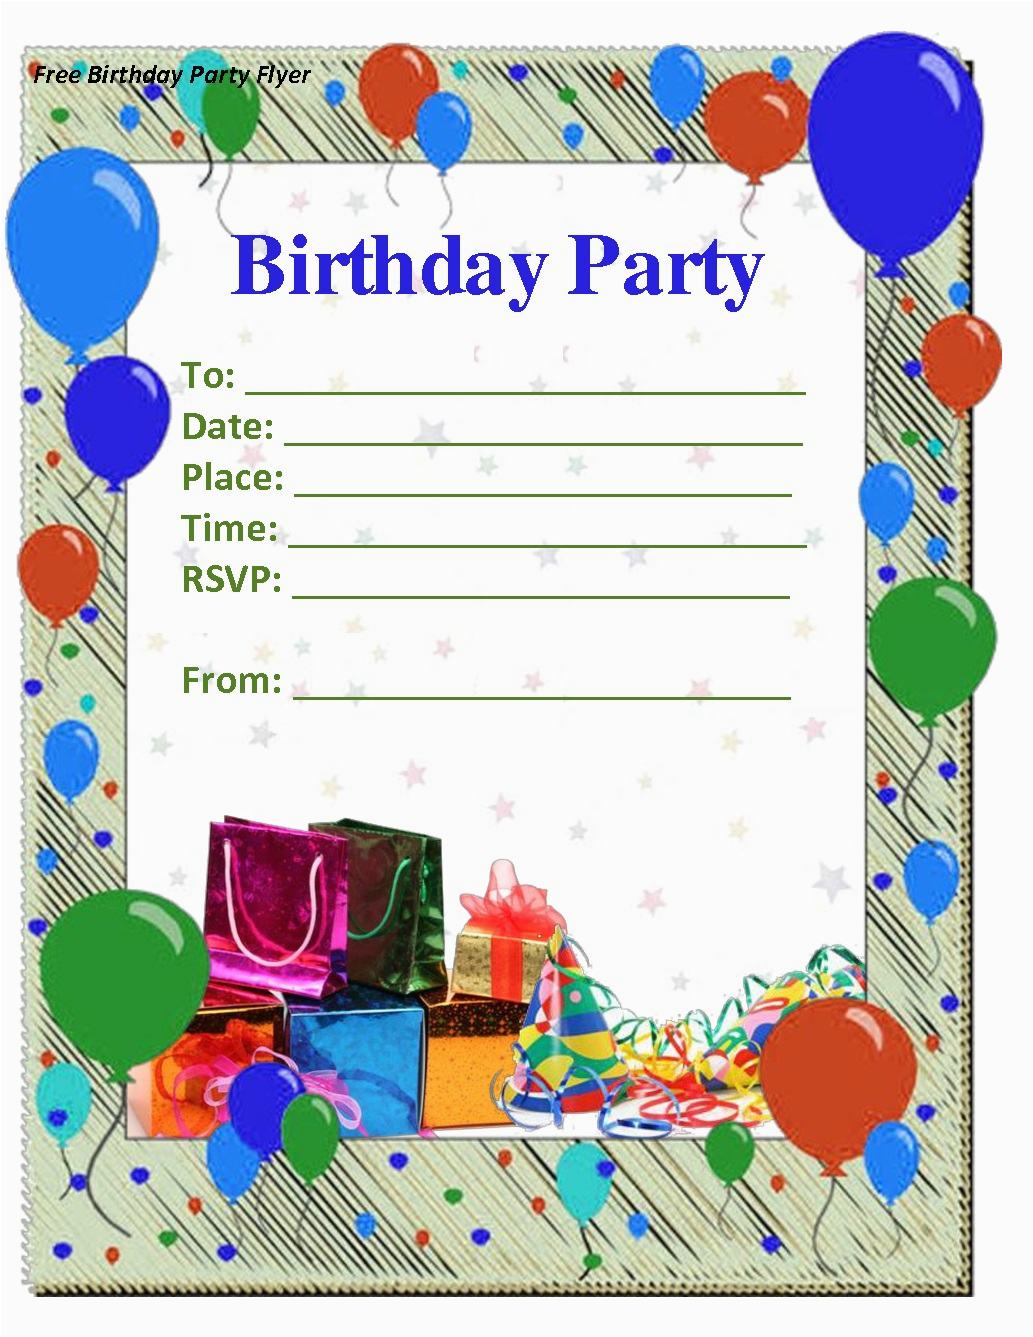 Birthday Bash Invitations Templates 50 Free Birthday Invitation Templates You Will Love